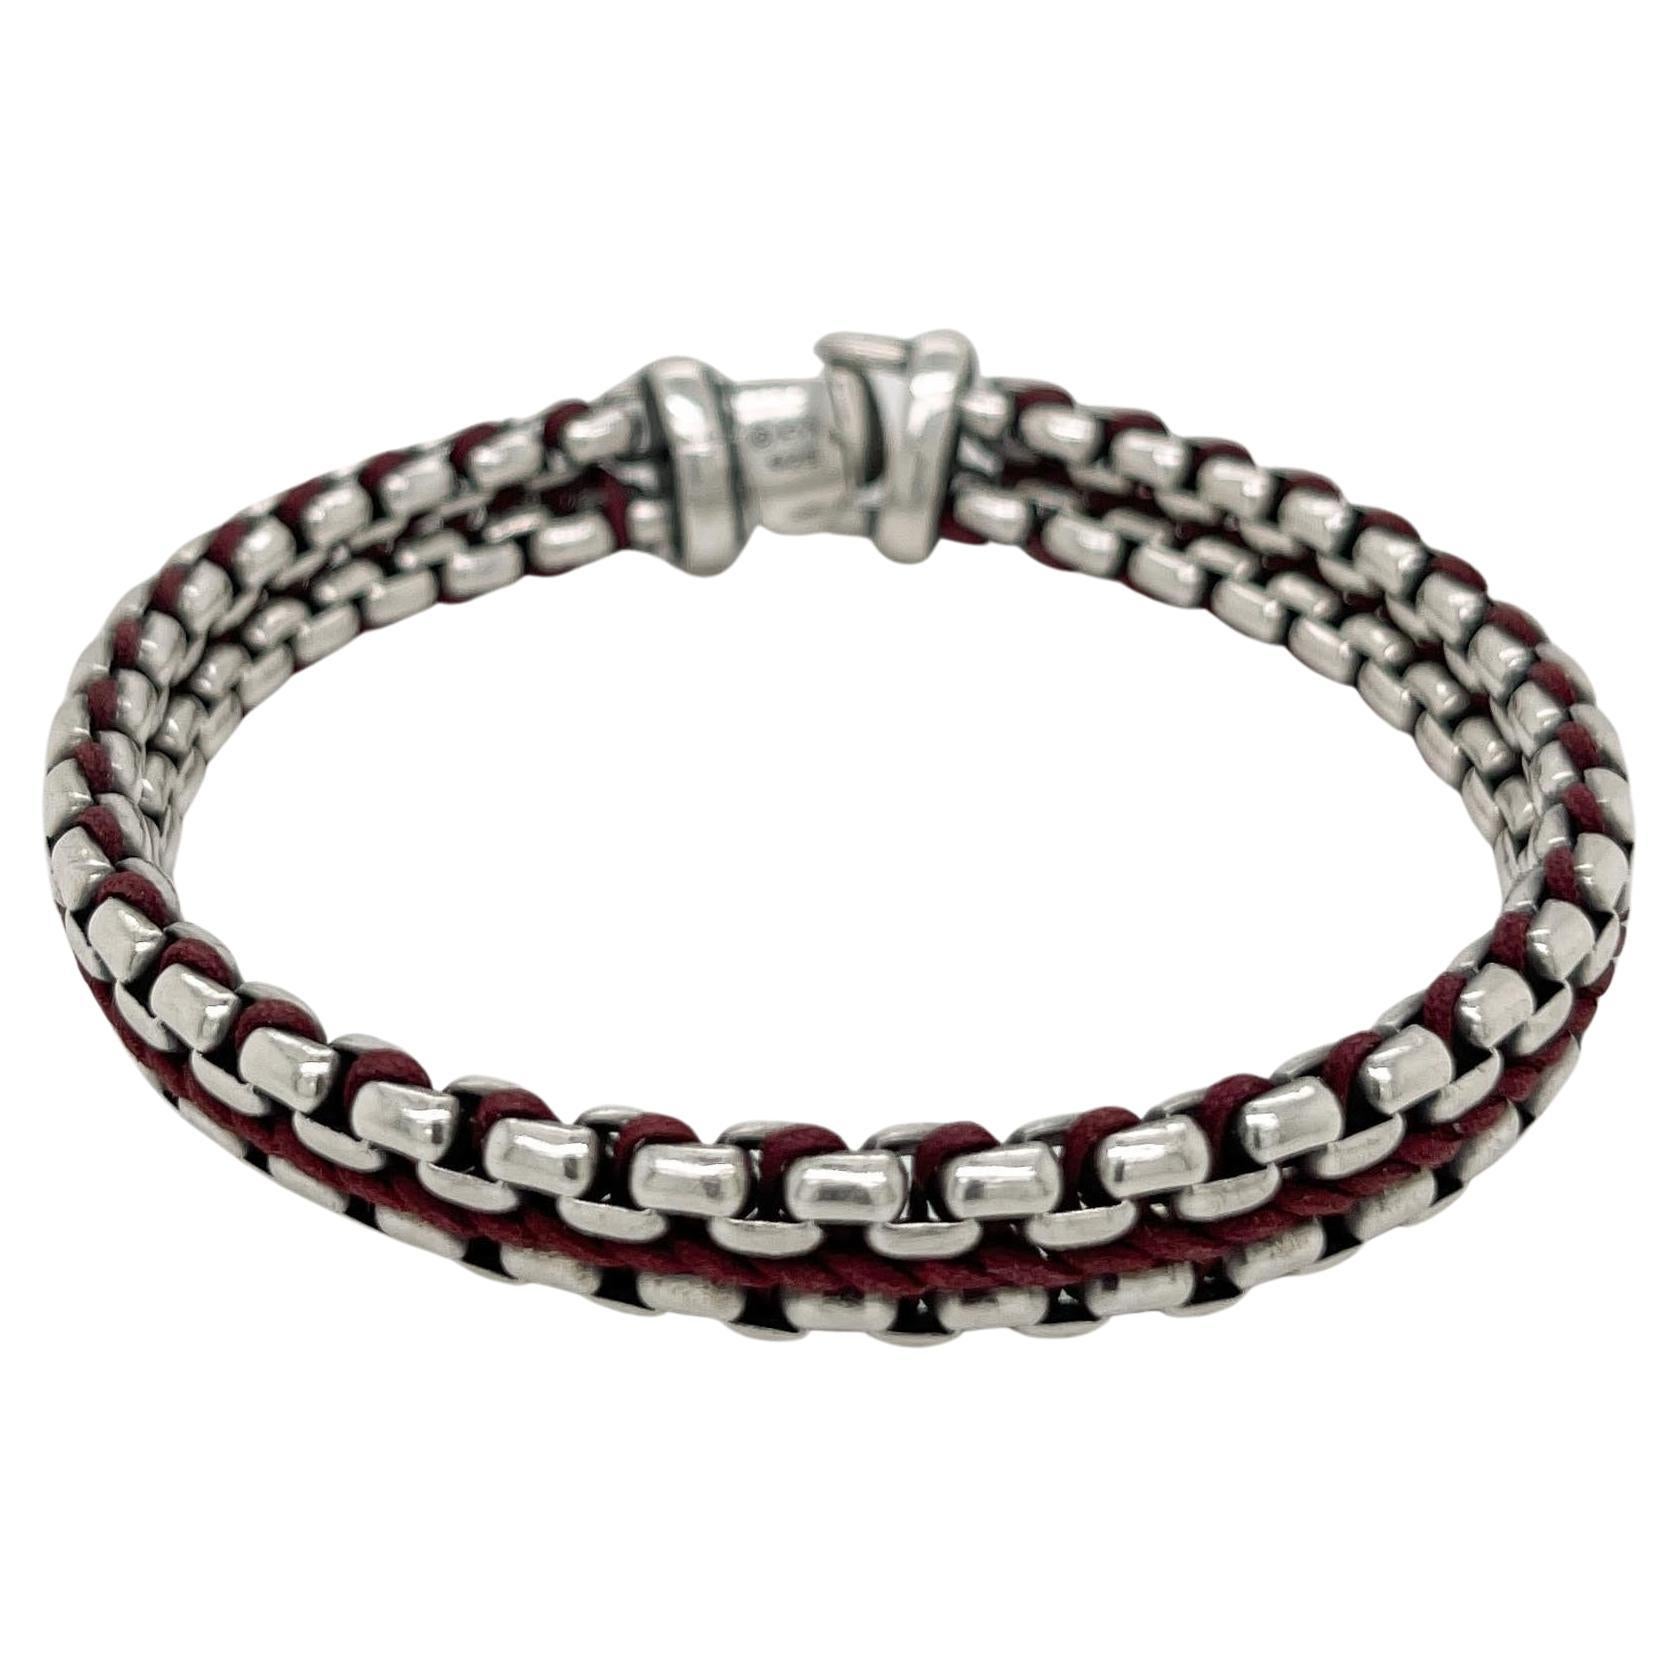 Black cord bracelet - infinity symbol and balls of silver colour |  Jewellery Eshop EU